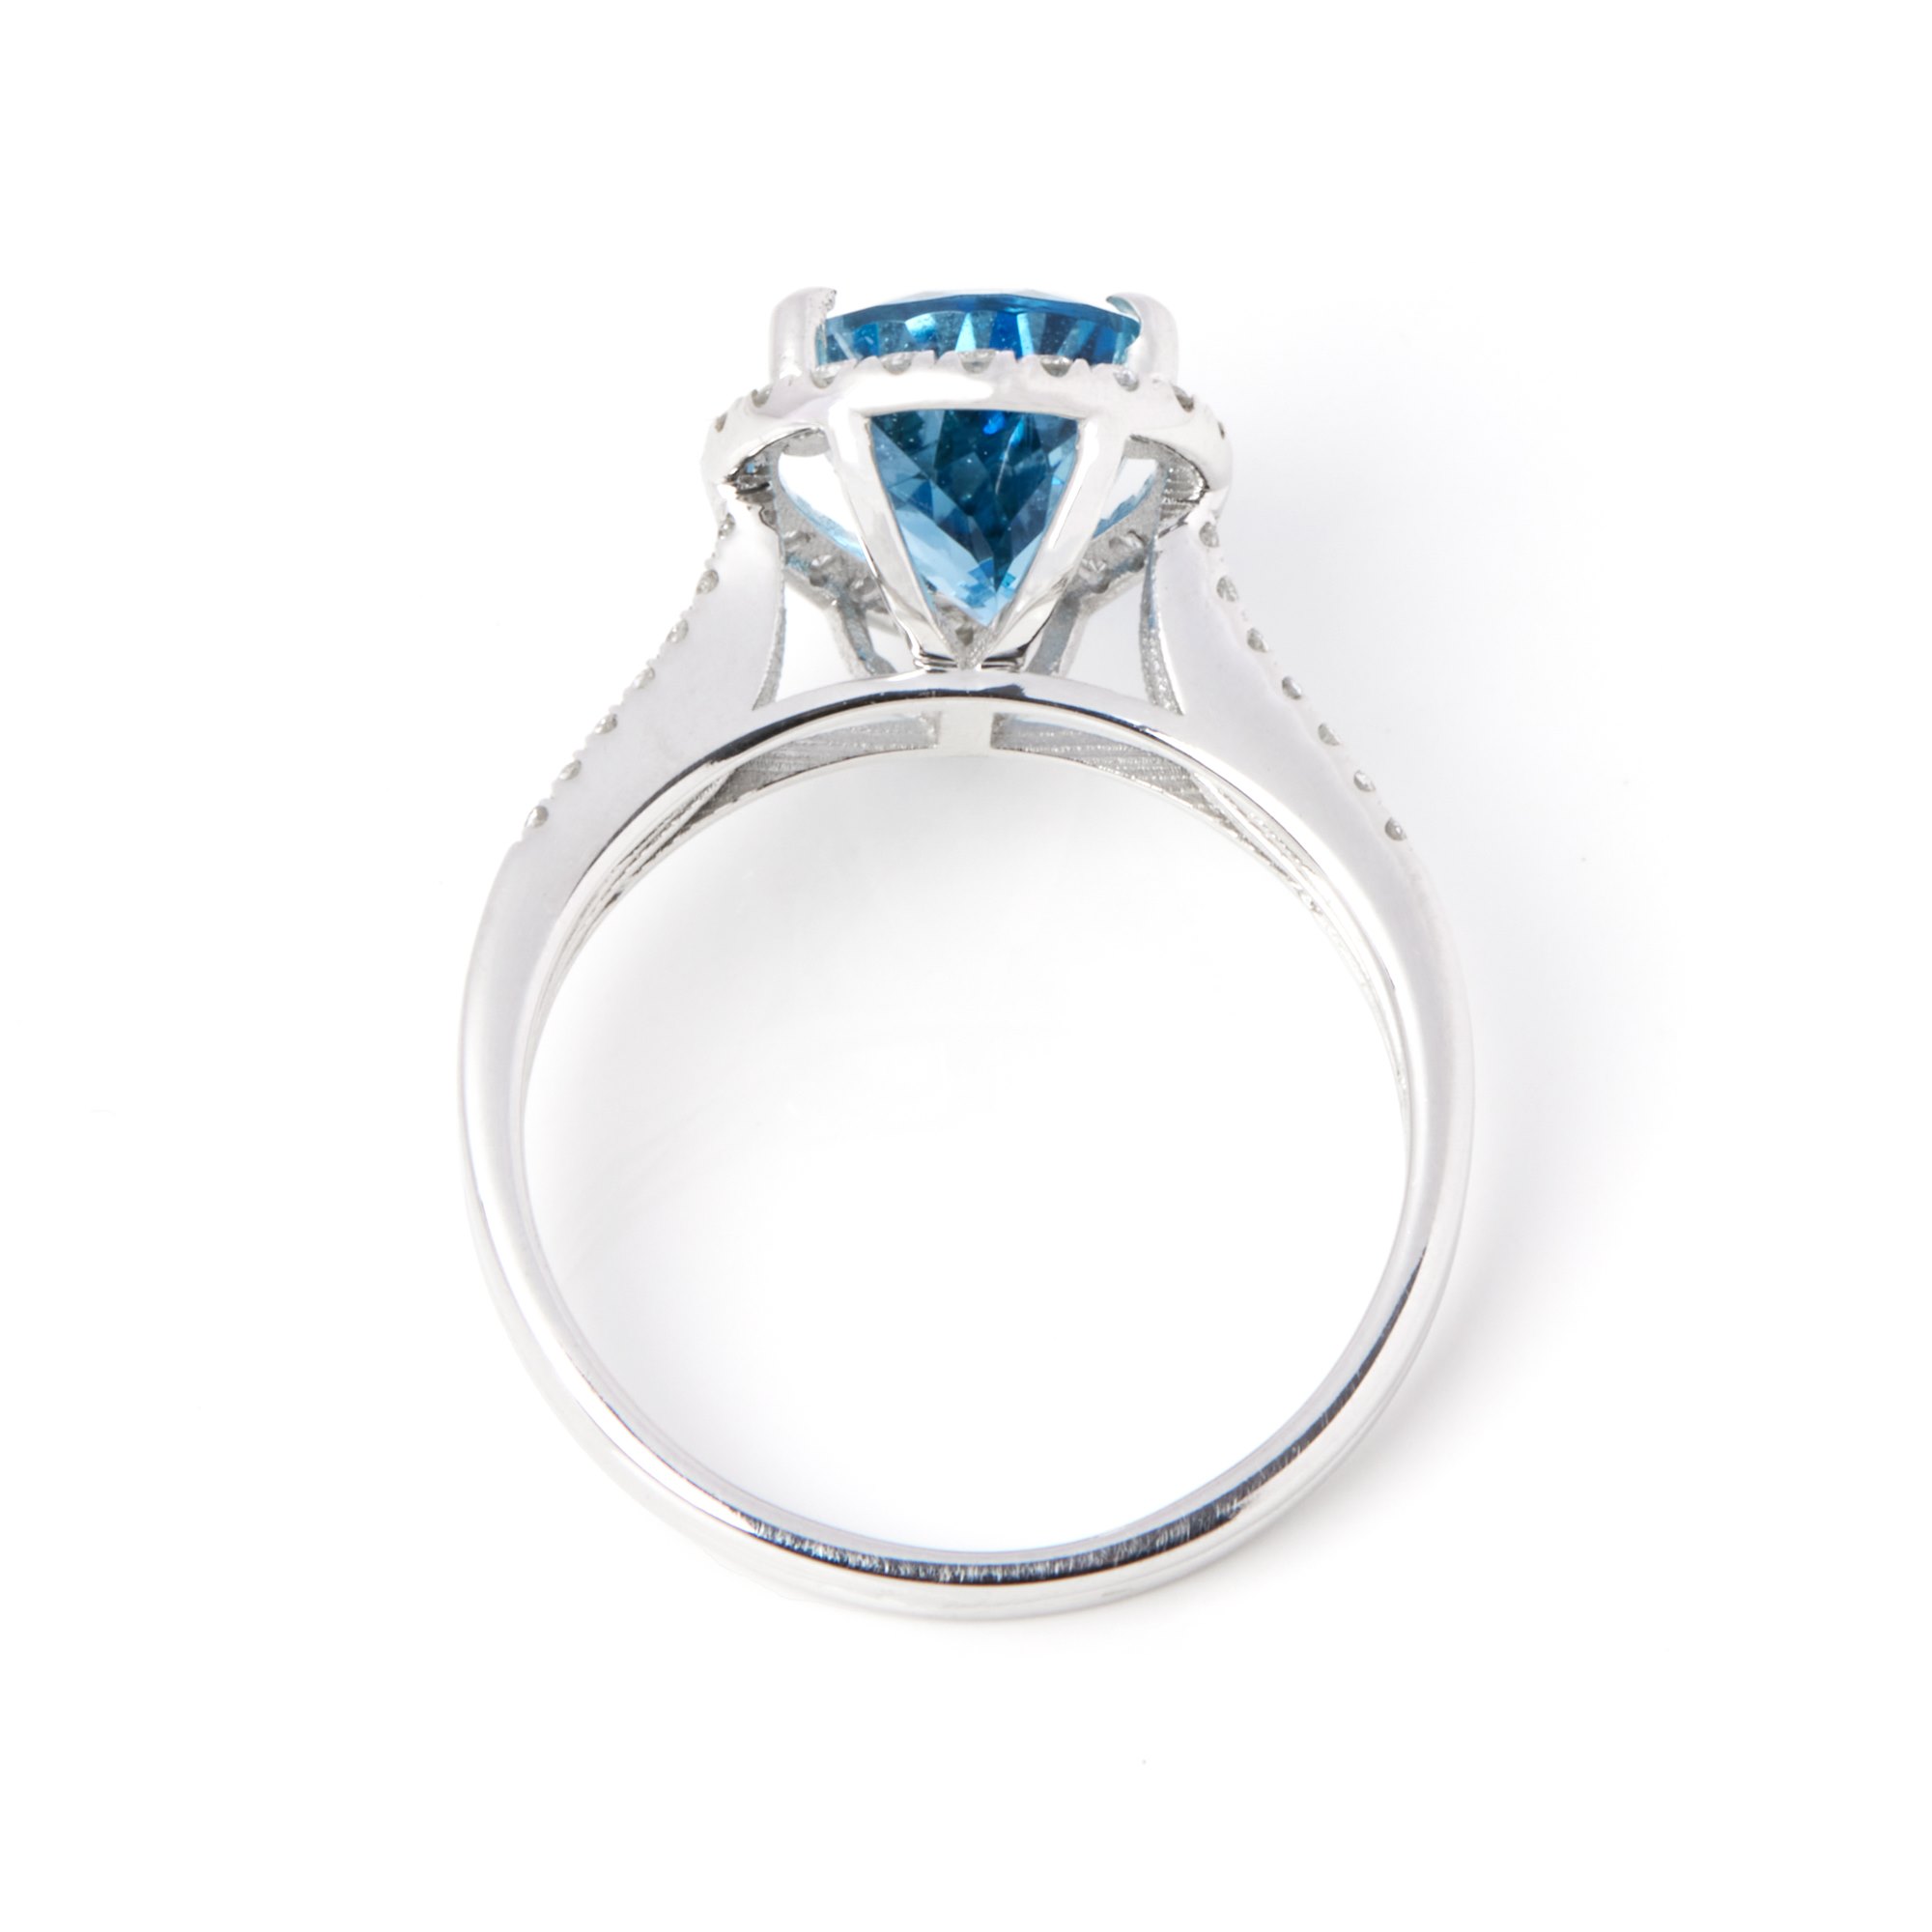 David Jerome Certified 2.52ct Pear Cut Aquamarine and Diamond Ring